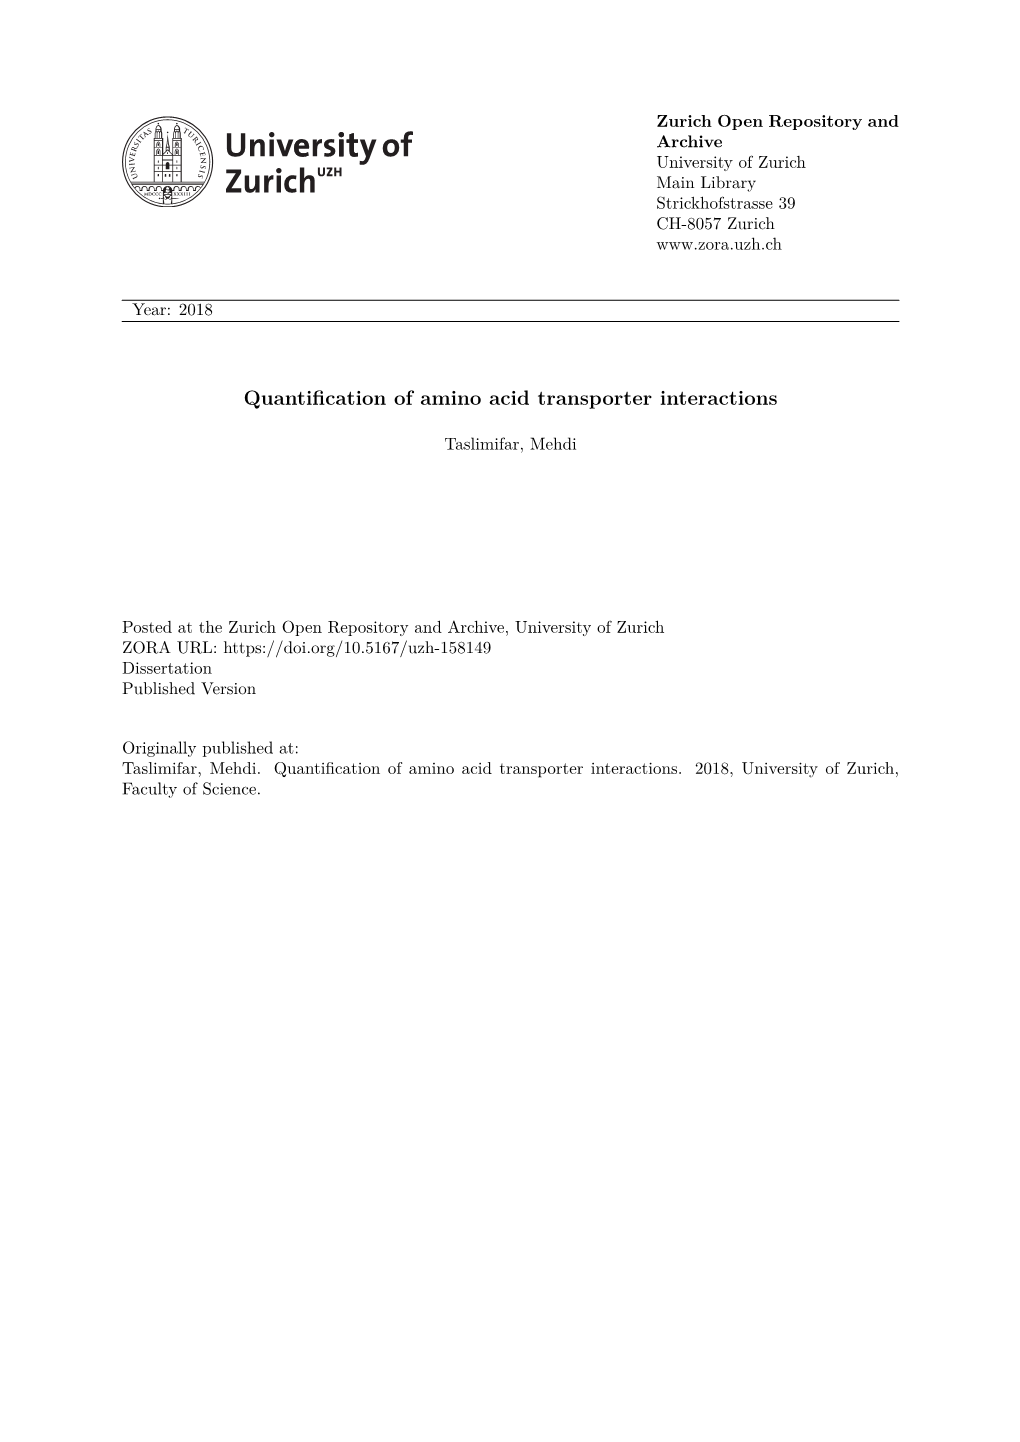 Quantification of Amino Acid Transporter Interactions